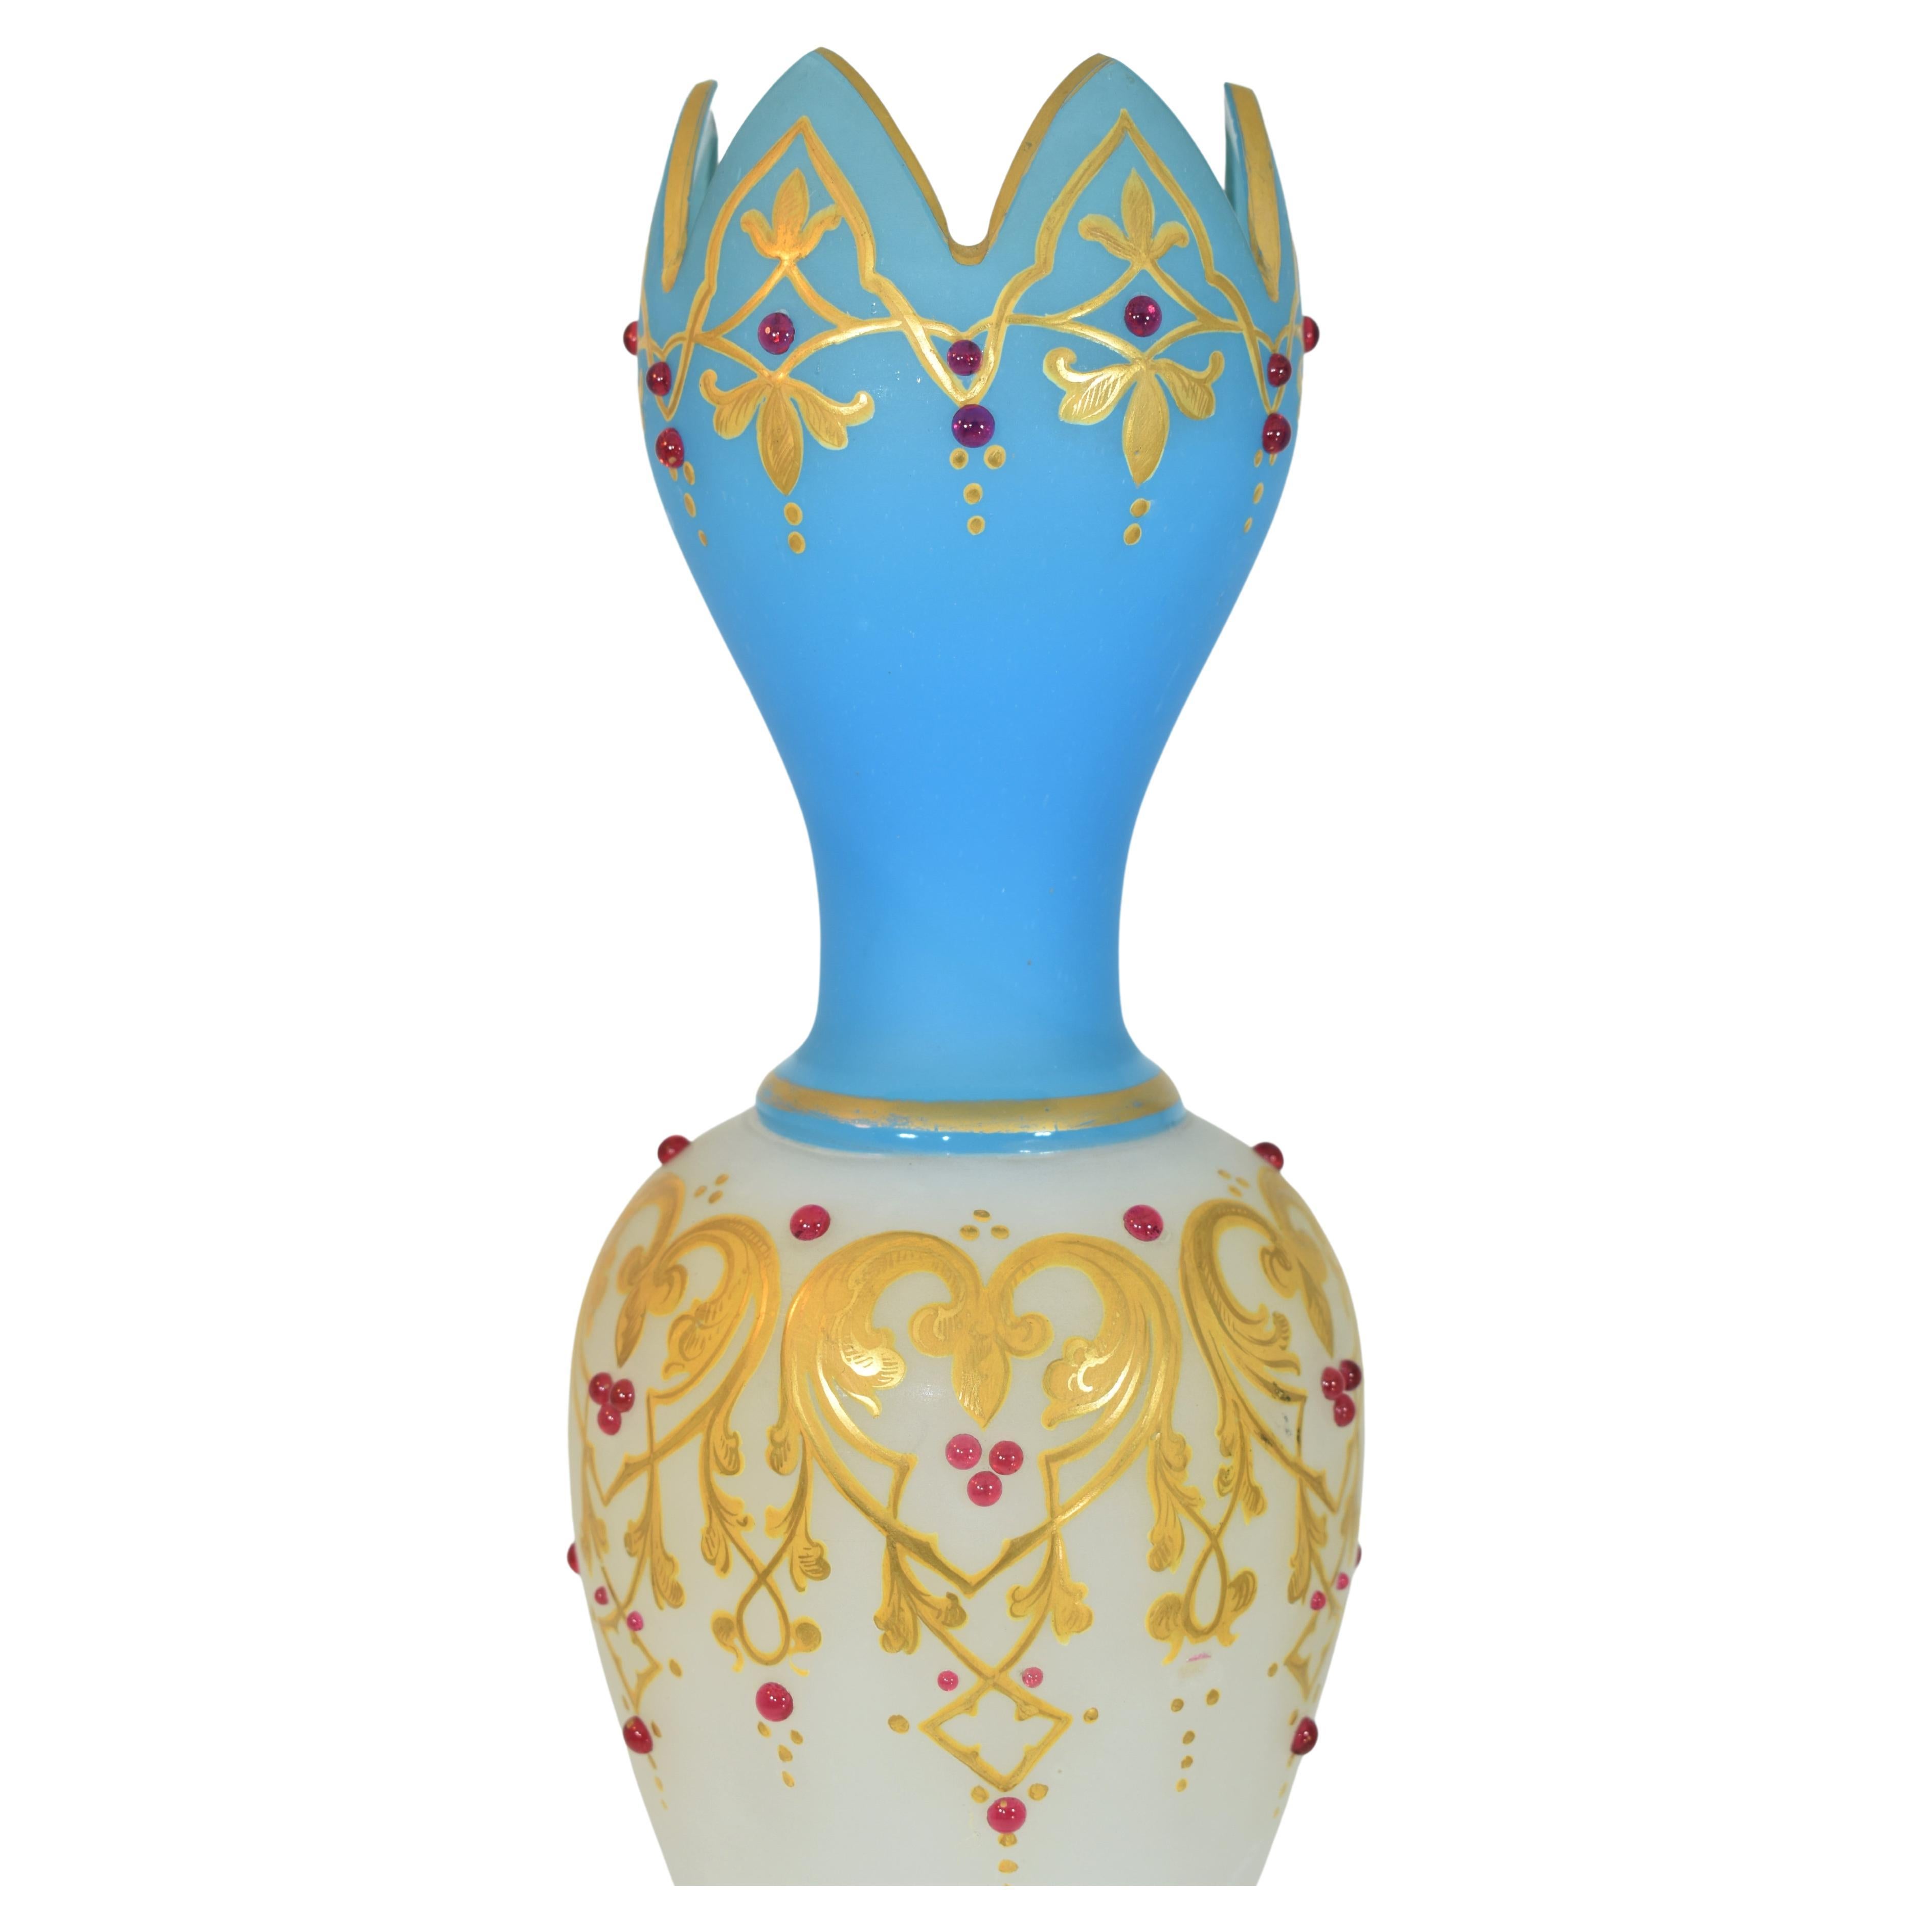 opalescent glass vase